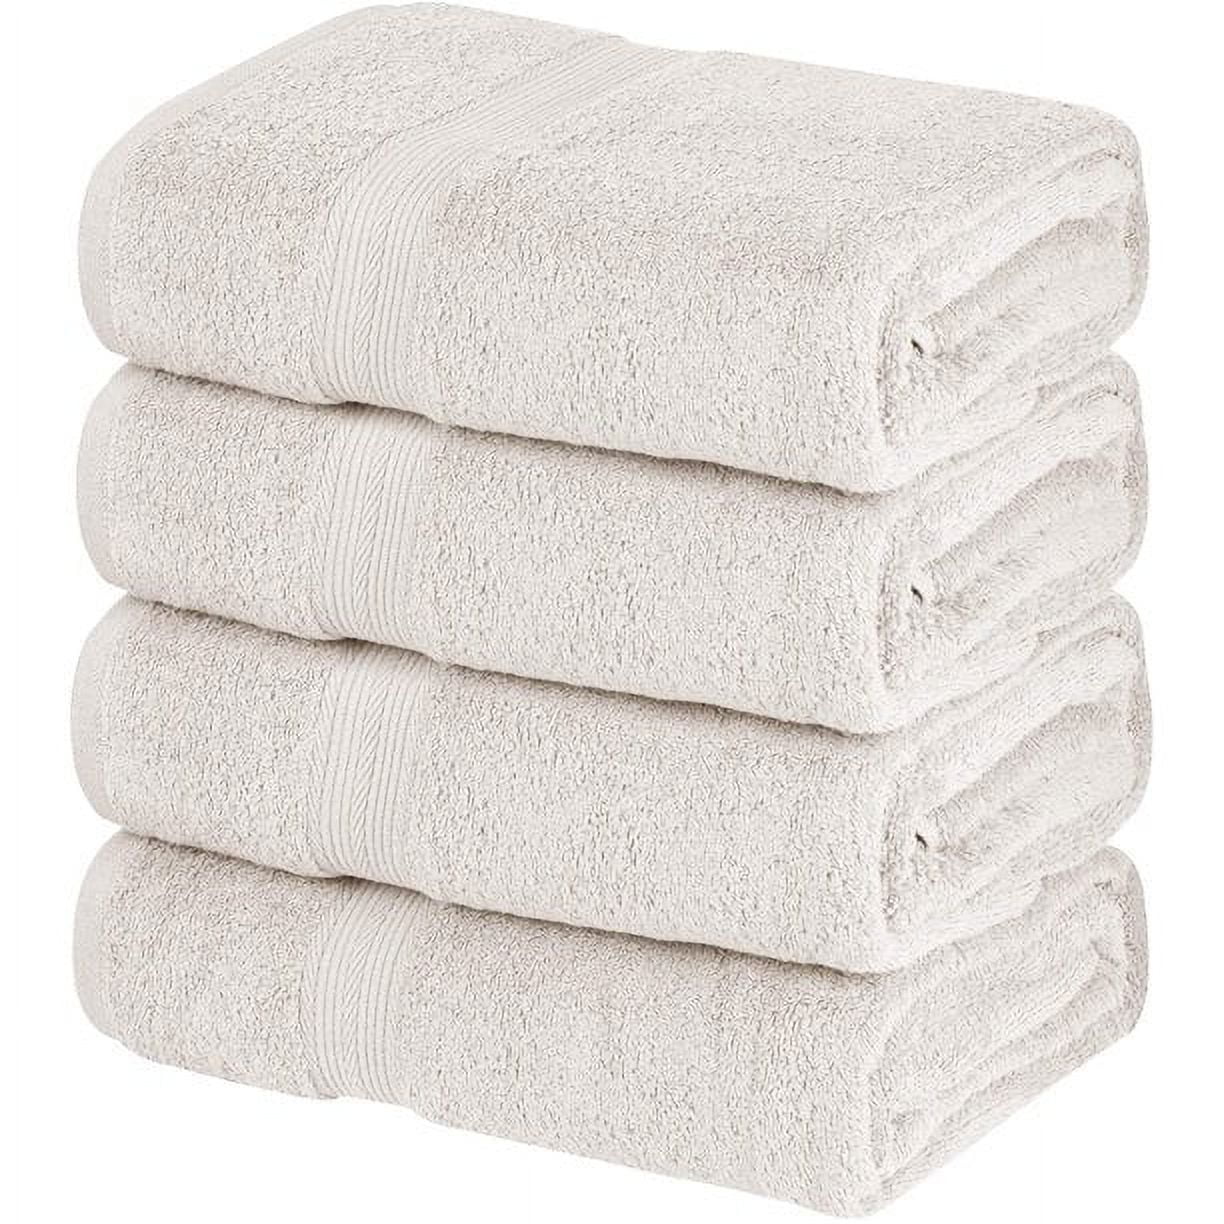 Beauty Threadz- 100% Cotton Bath Towels 4 Piece Set Soft Fluffy